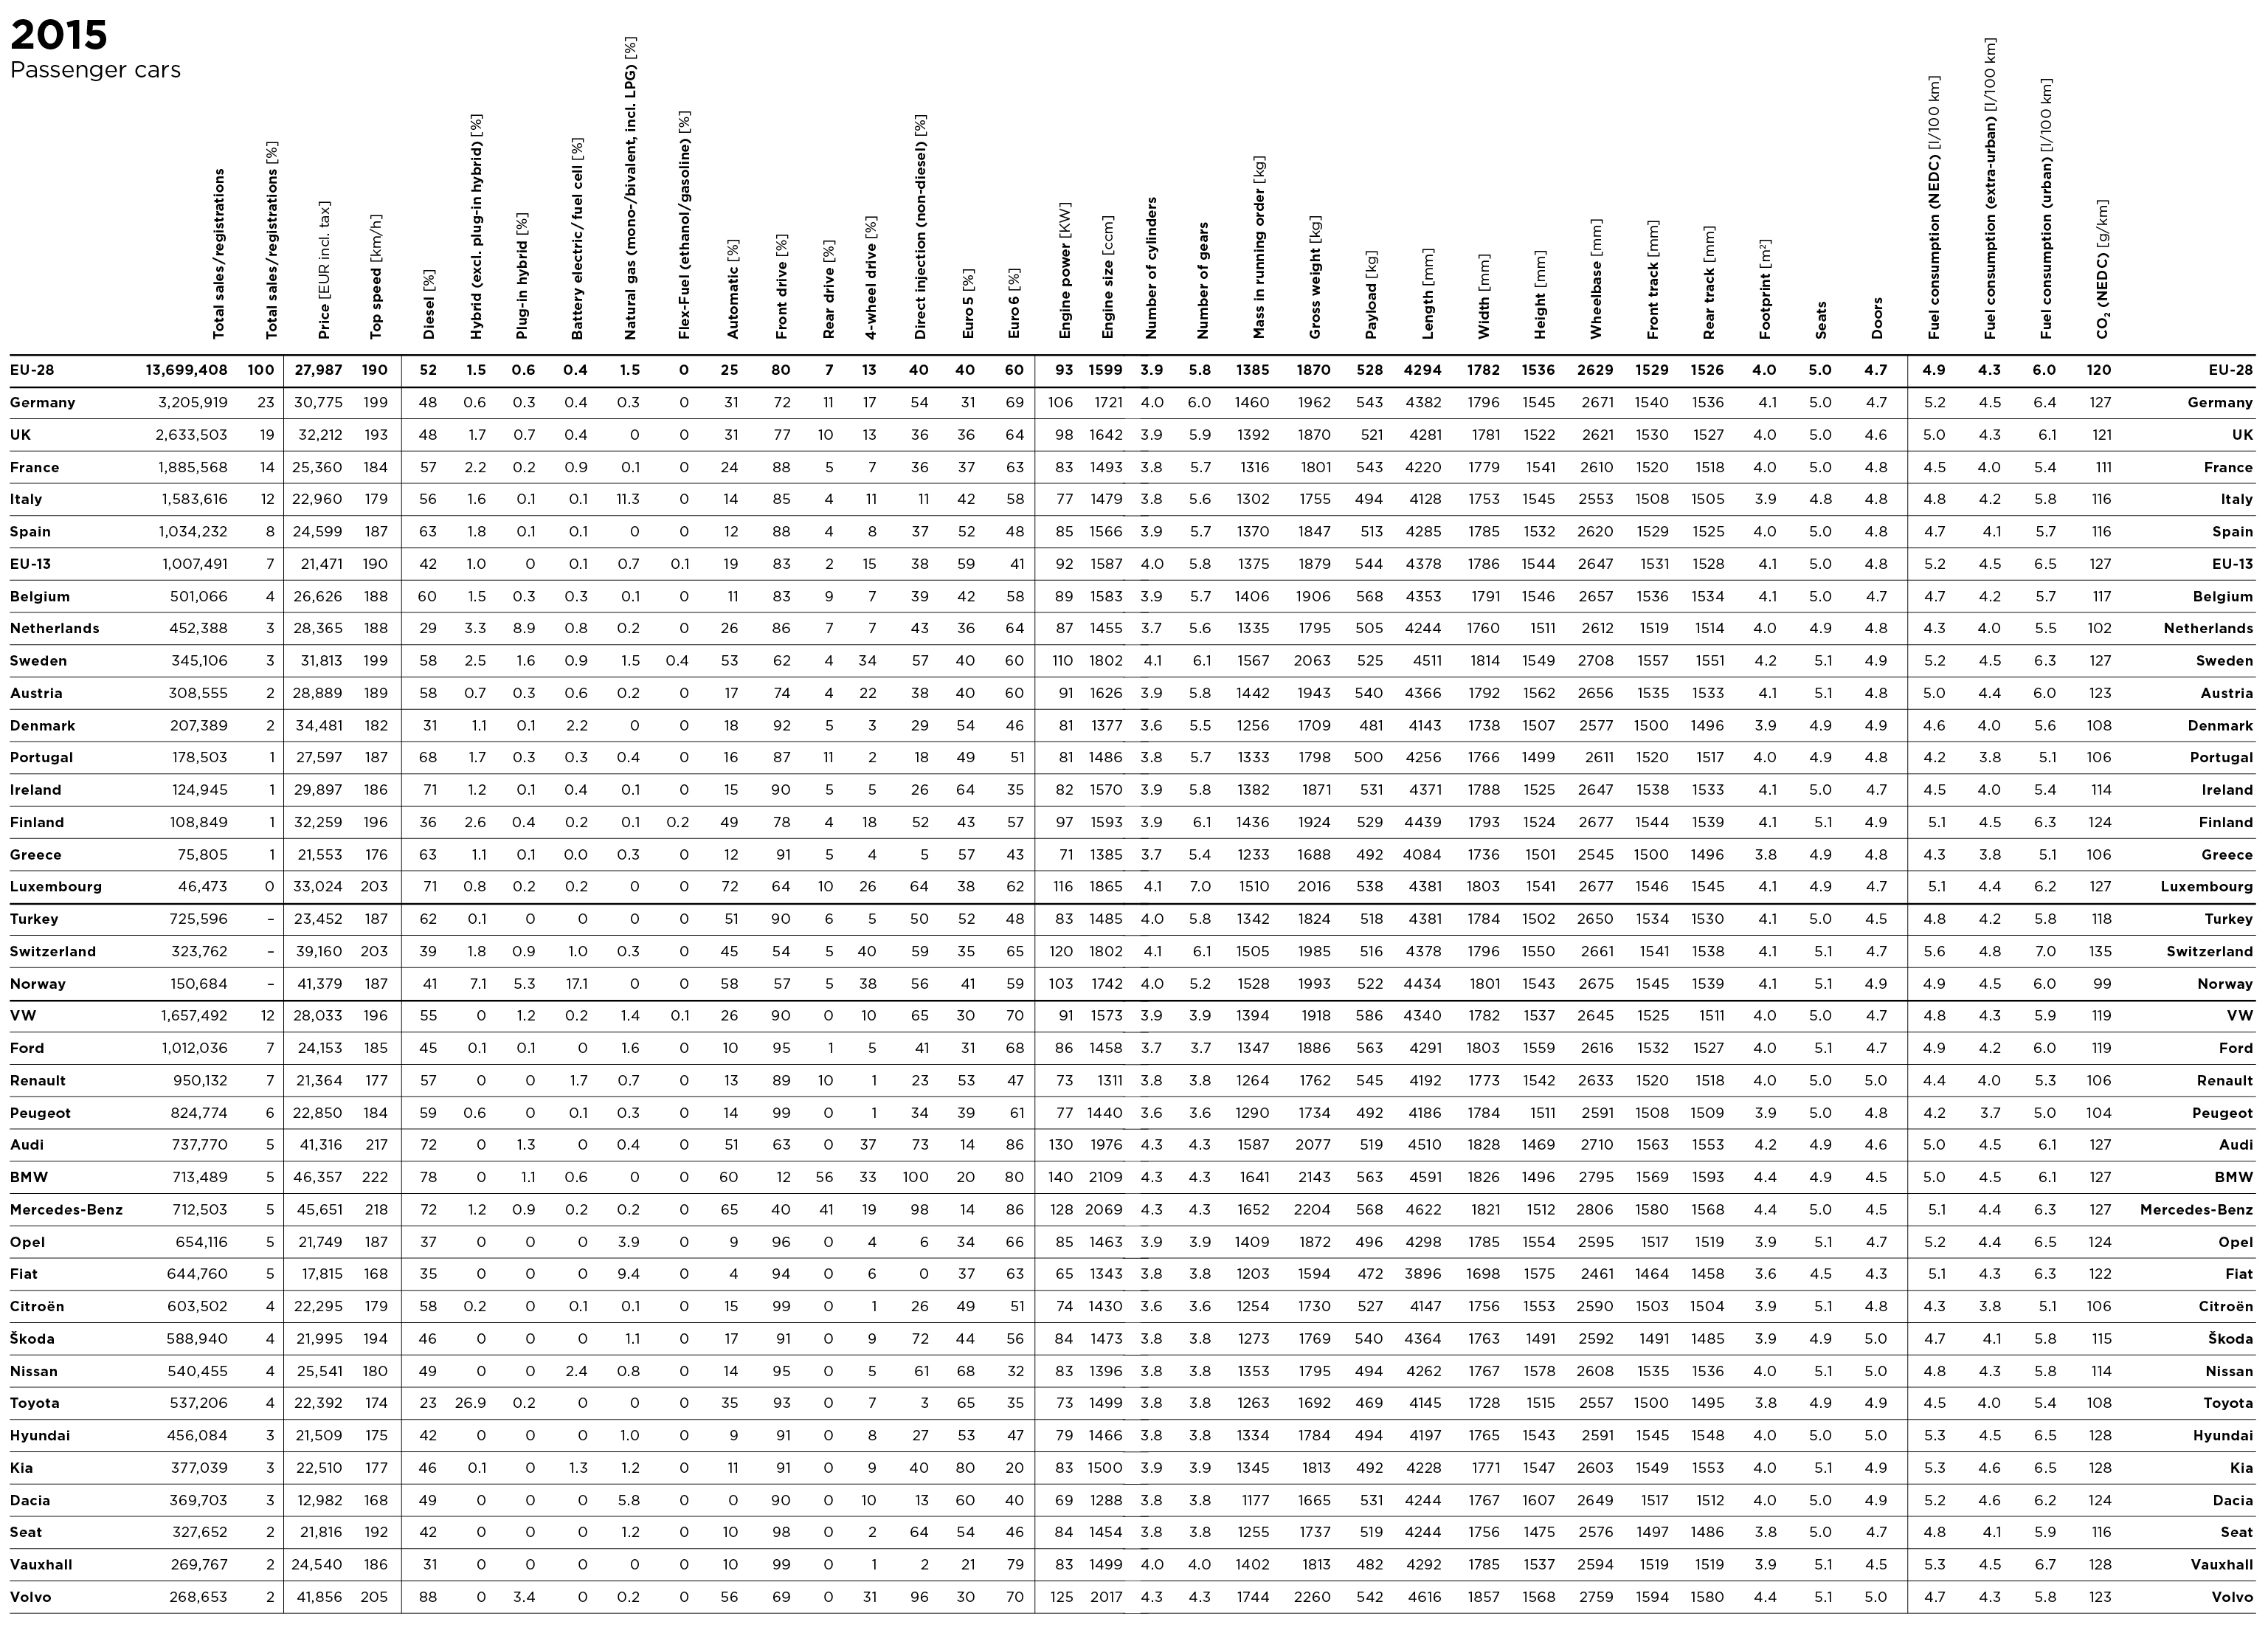 PC 2015 data